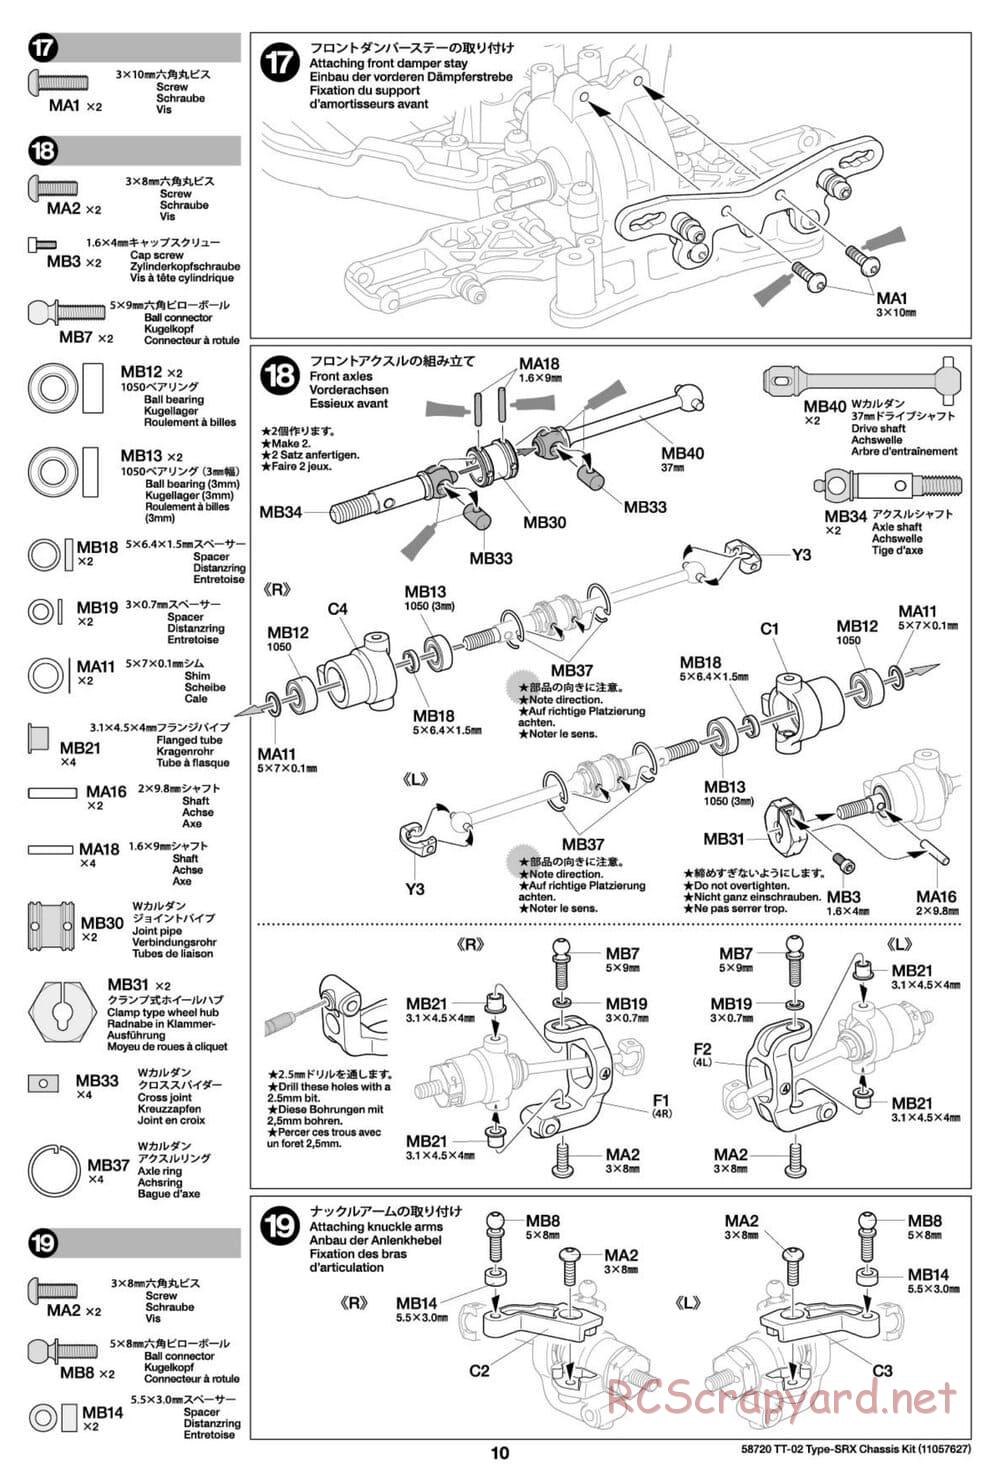 Tamiya - TT-02 Type-SRX Chassis - Manual - Page 10